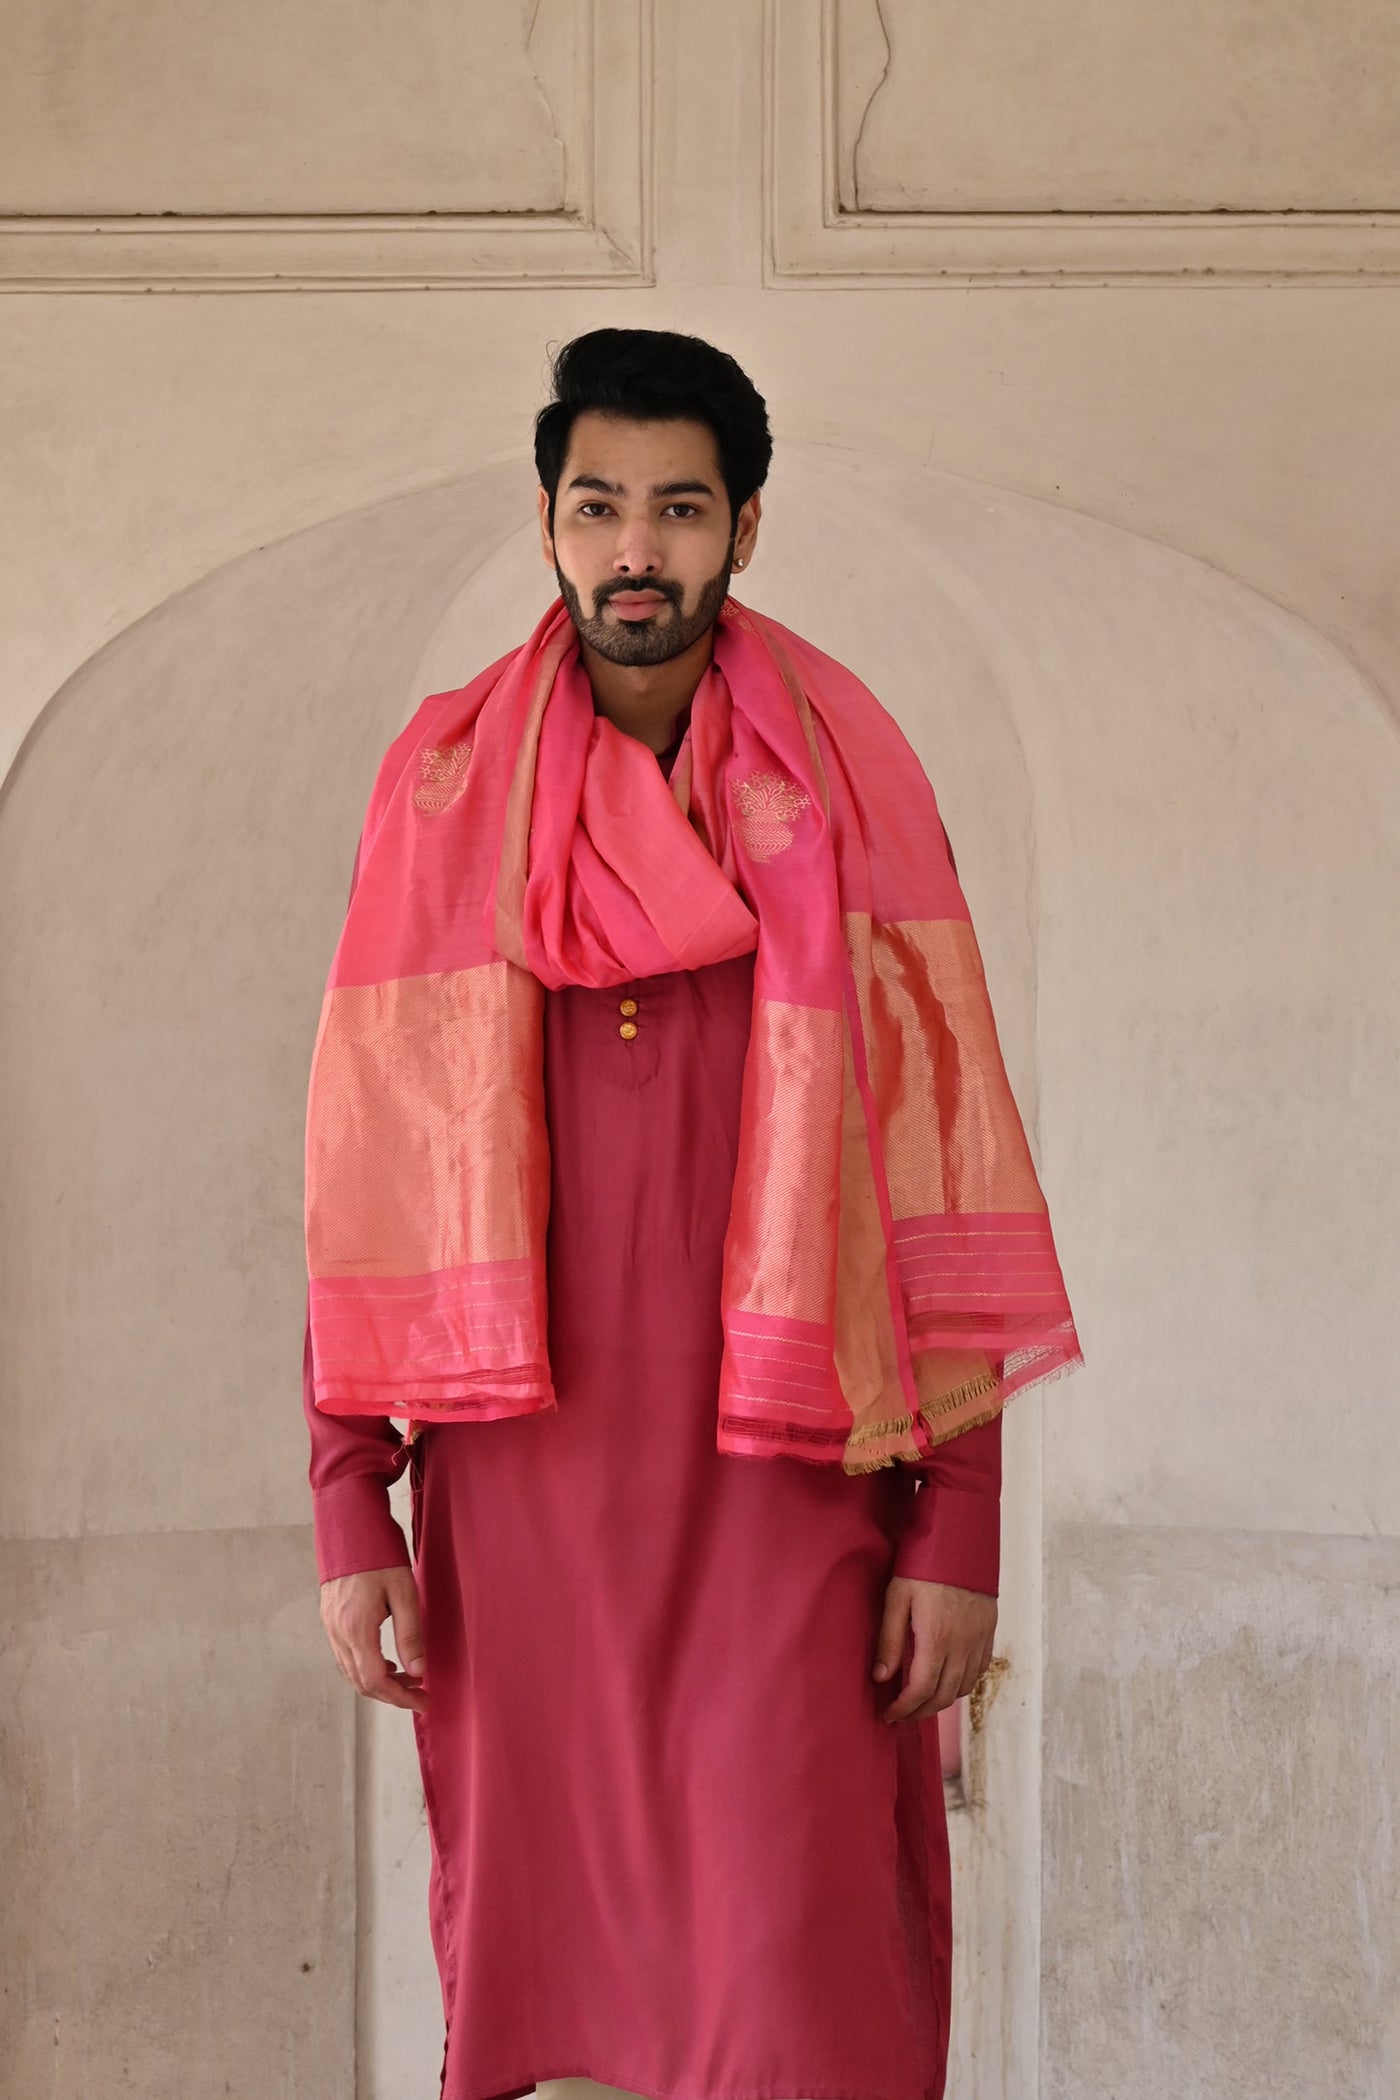 Shop online for red designer kurta and Aligarhi trouser for men